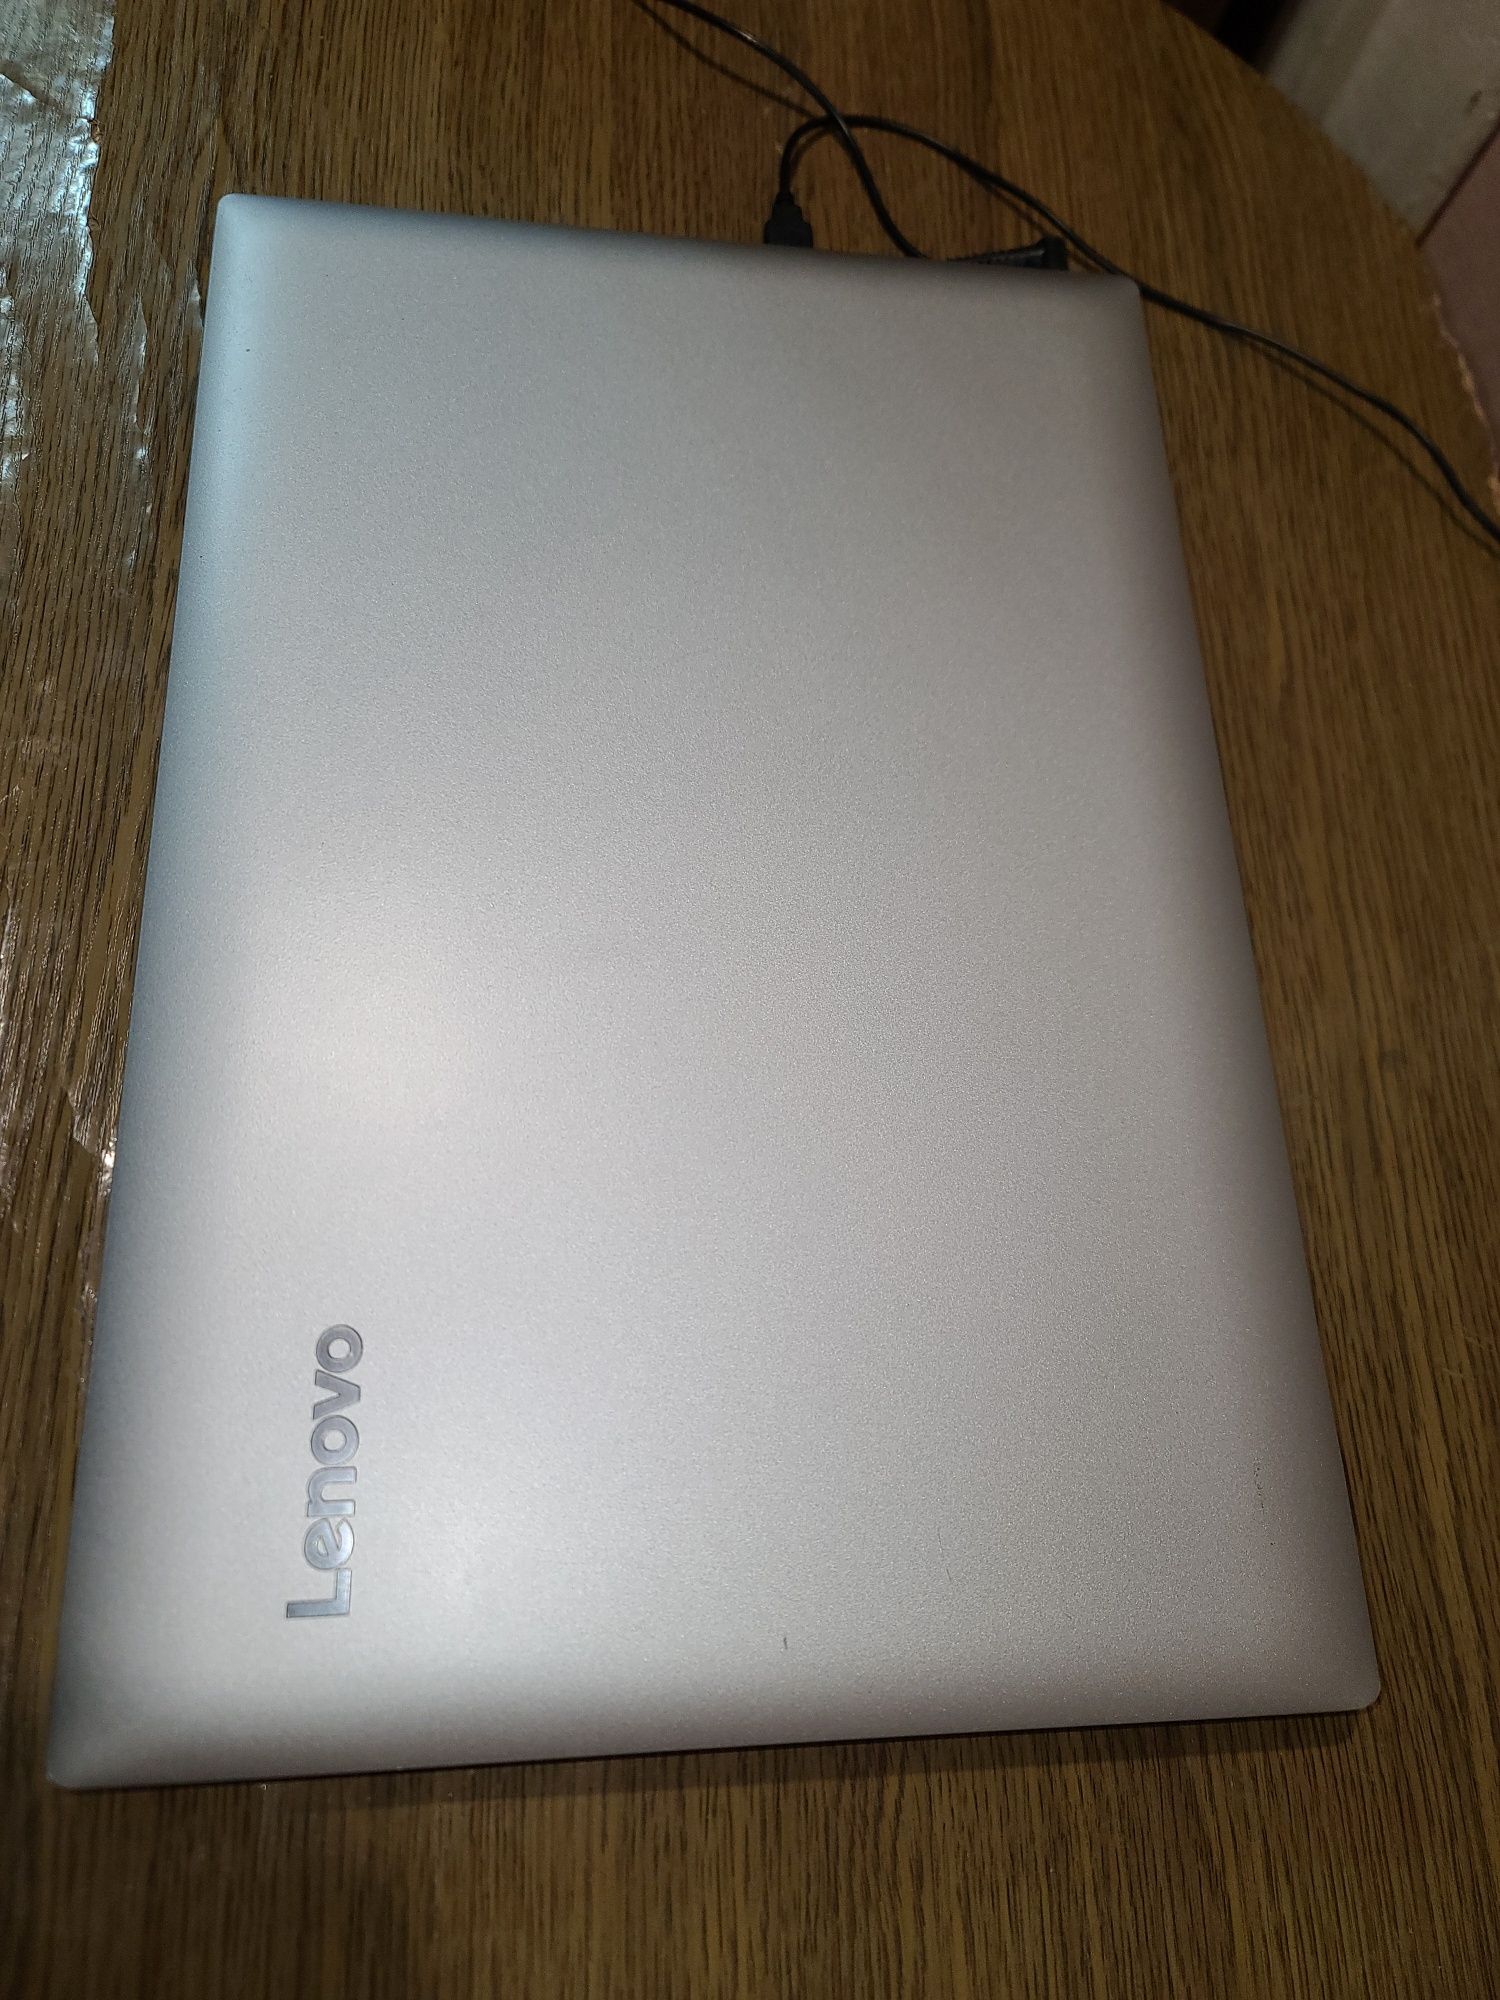 Ноутбук Lenovo 17.3 inch.12gb,500,